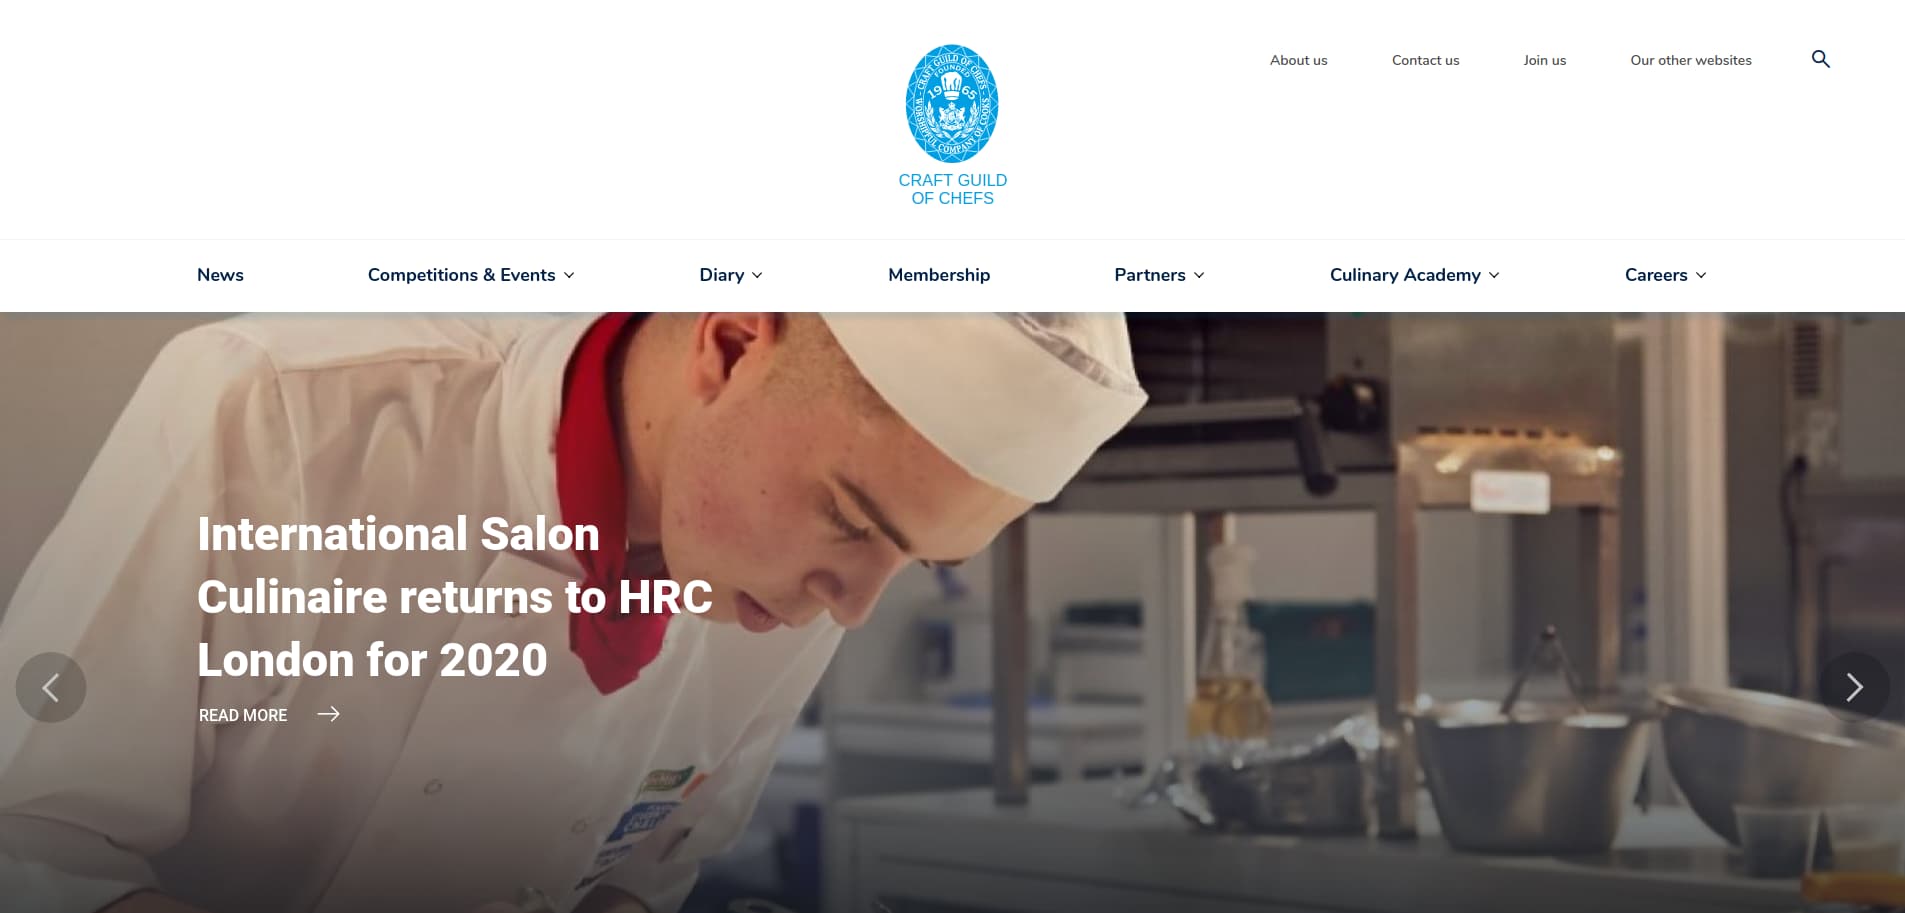 Craft guild of chefs website